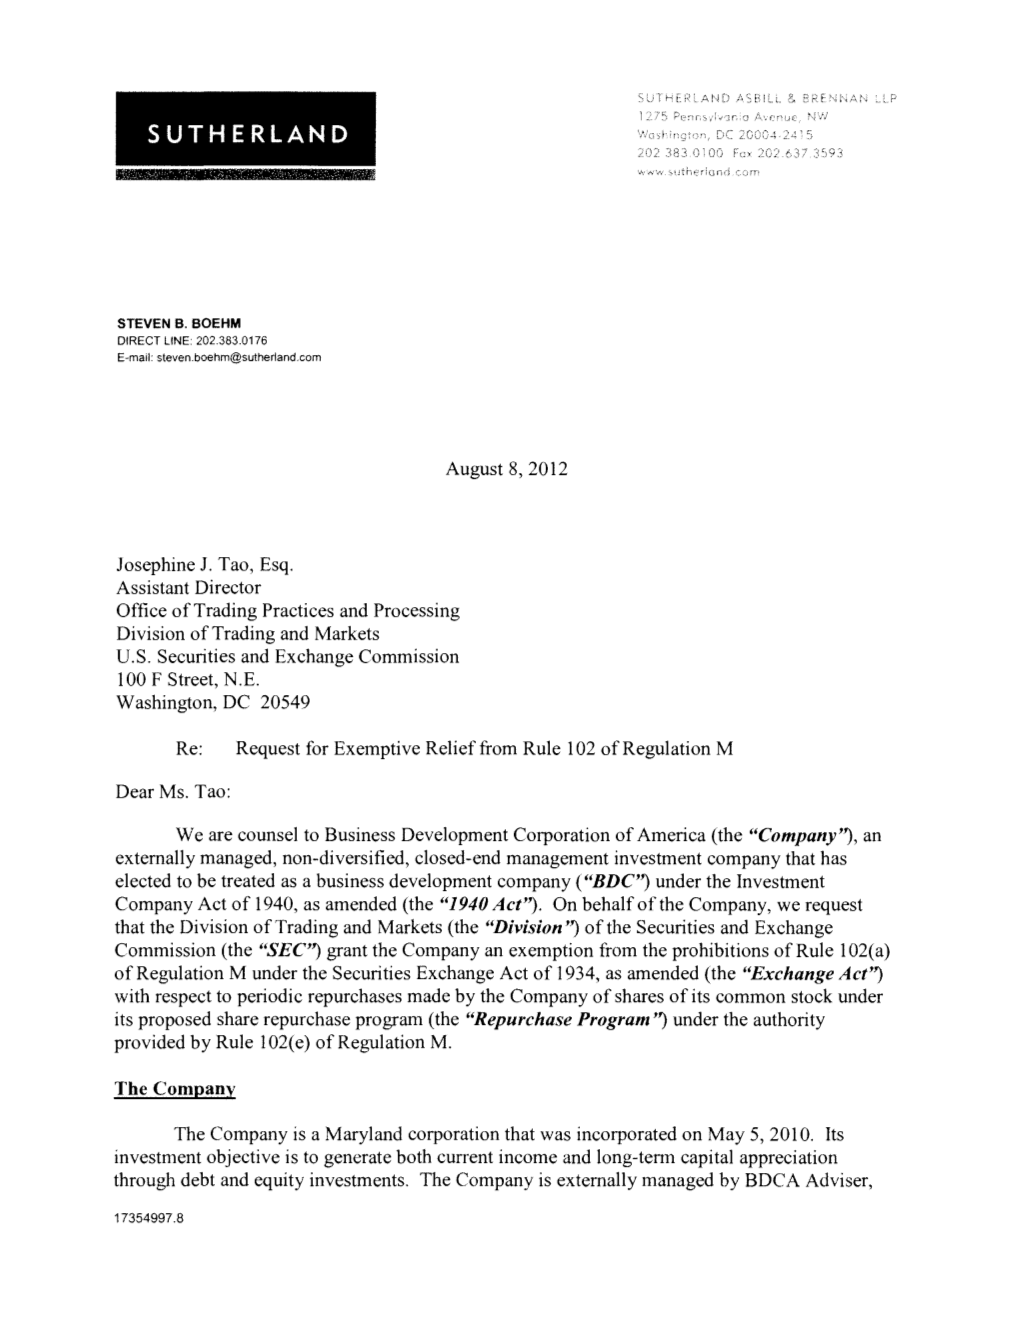 Business Development Corporation of America Request Letter